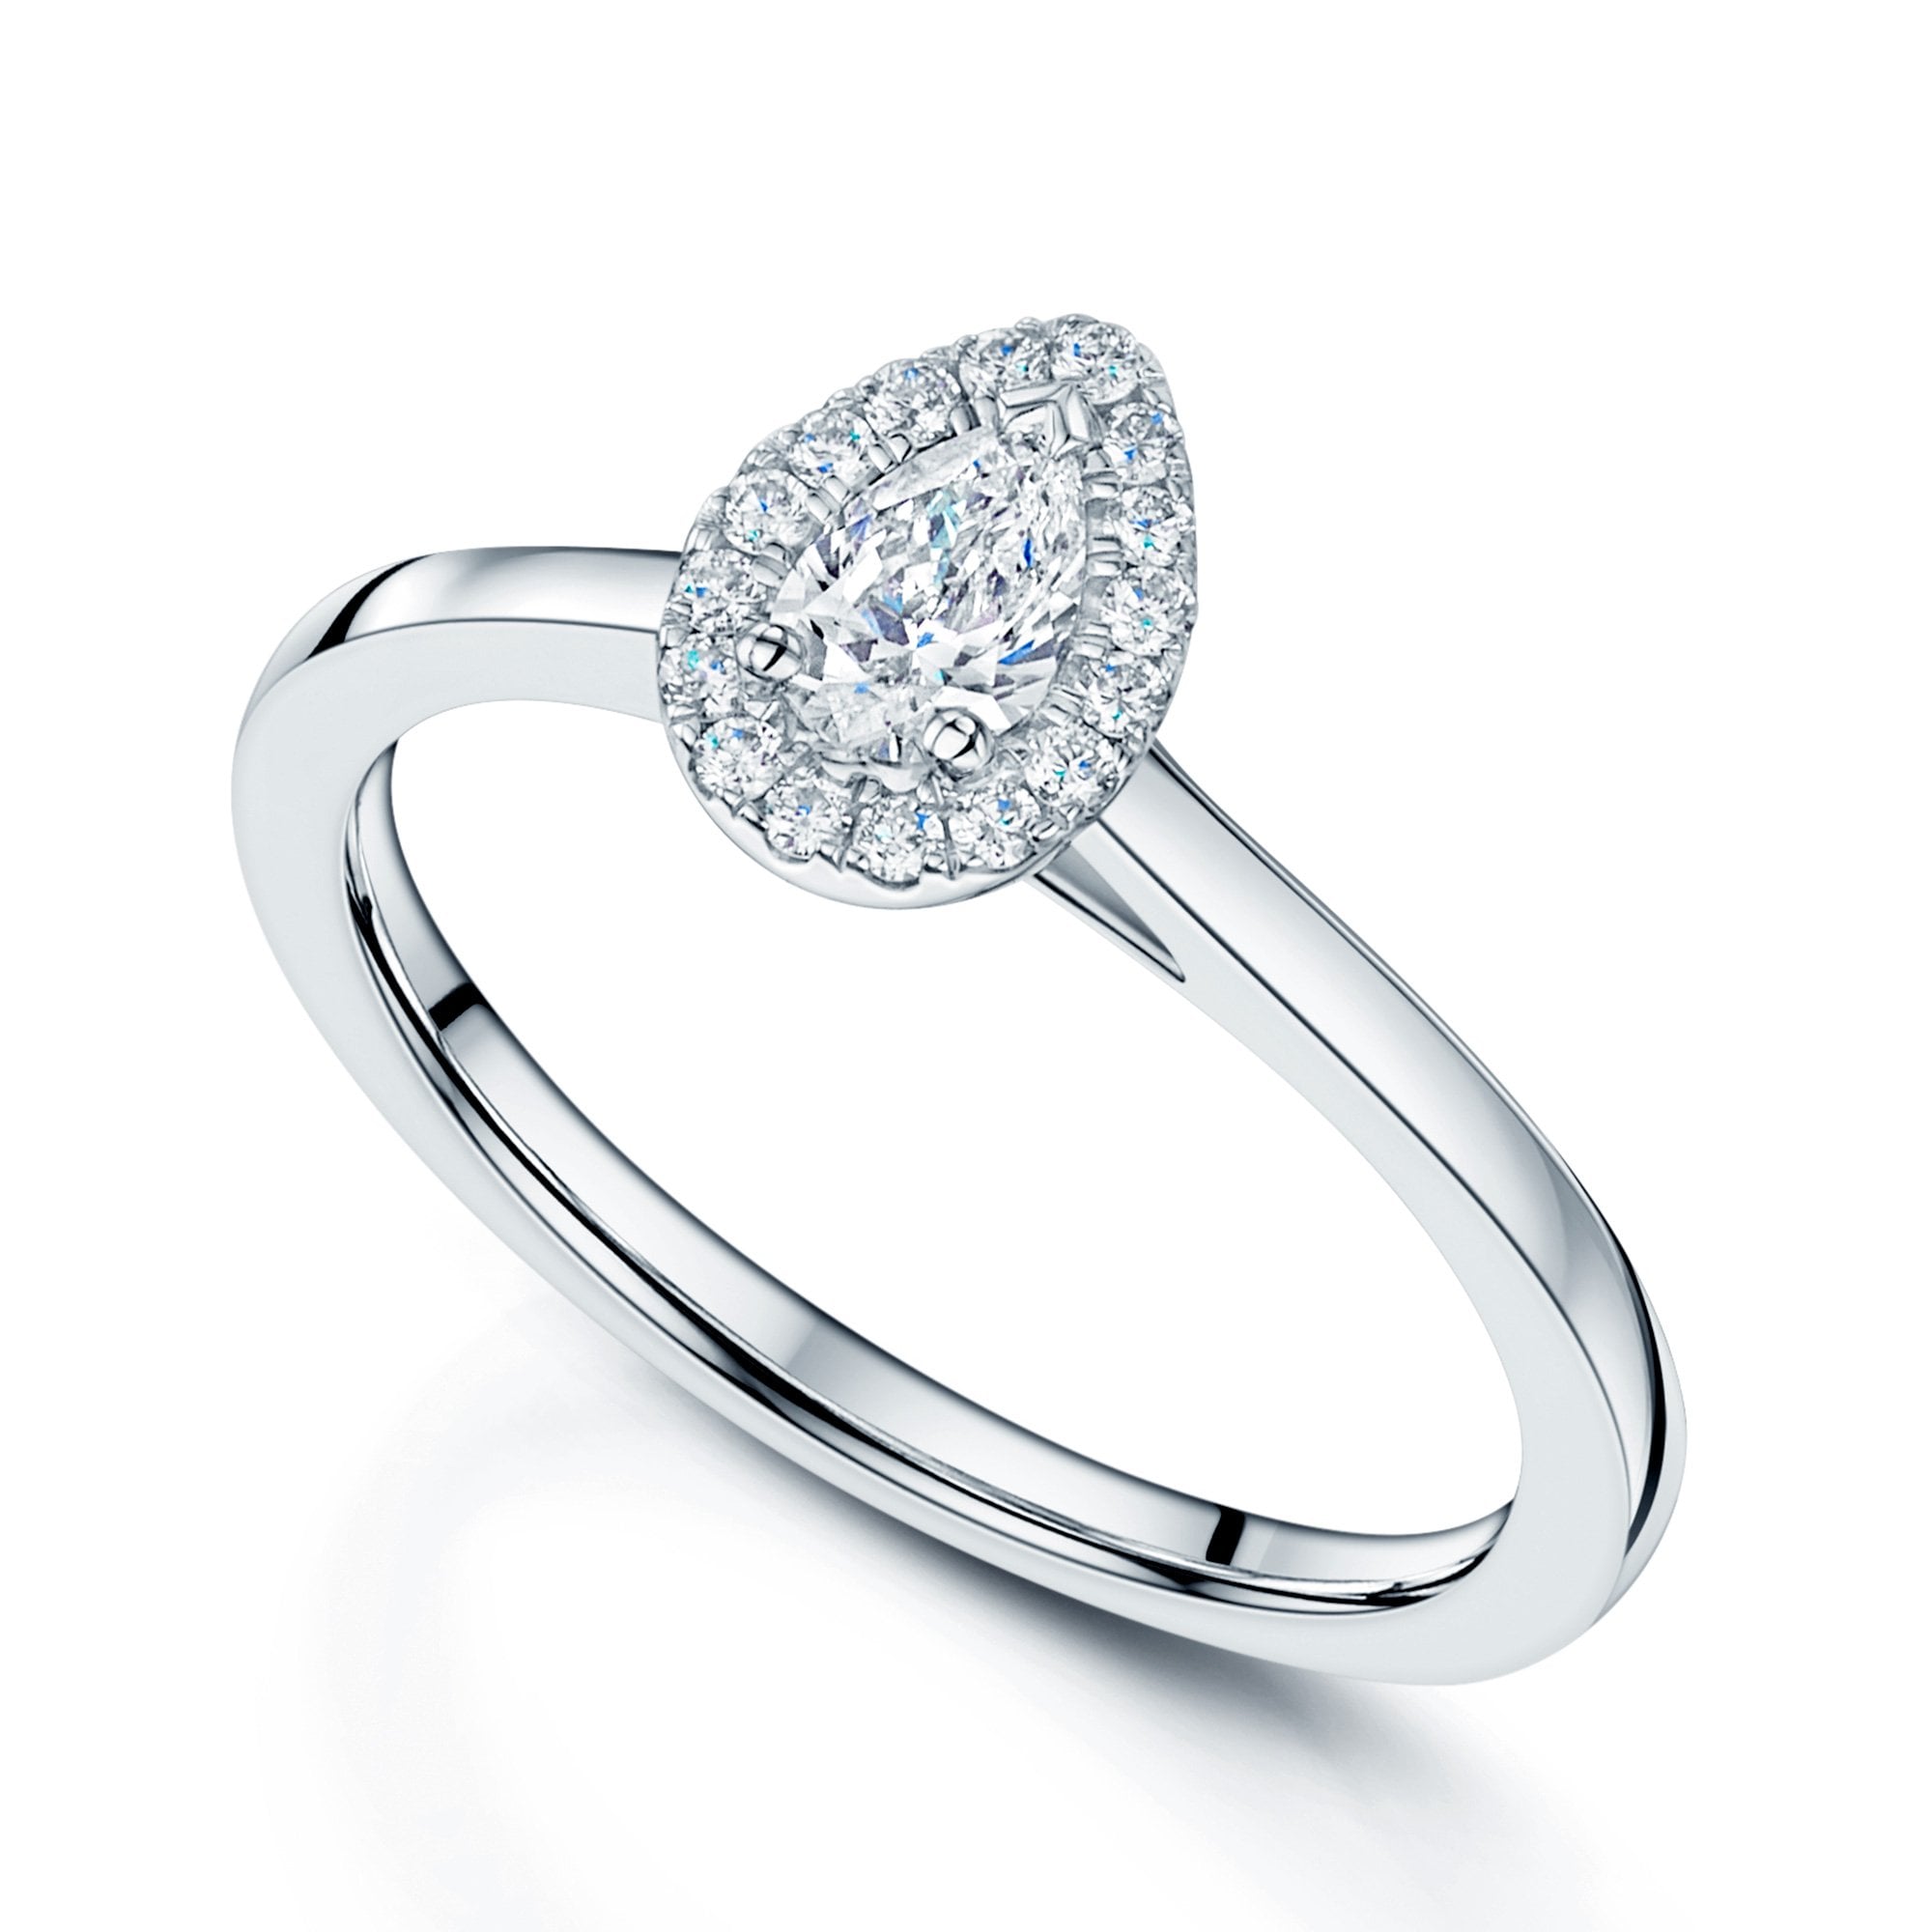 Platinum Pear Cut Diamond Ring With A Round Brilliant Cut Diamond Halo Setting